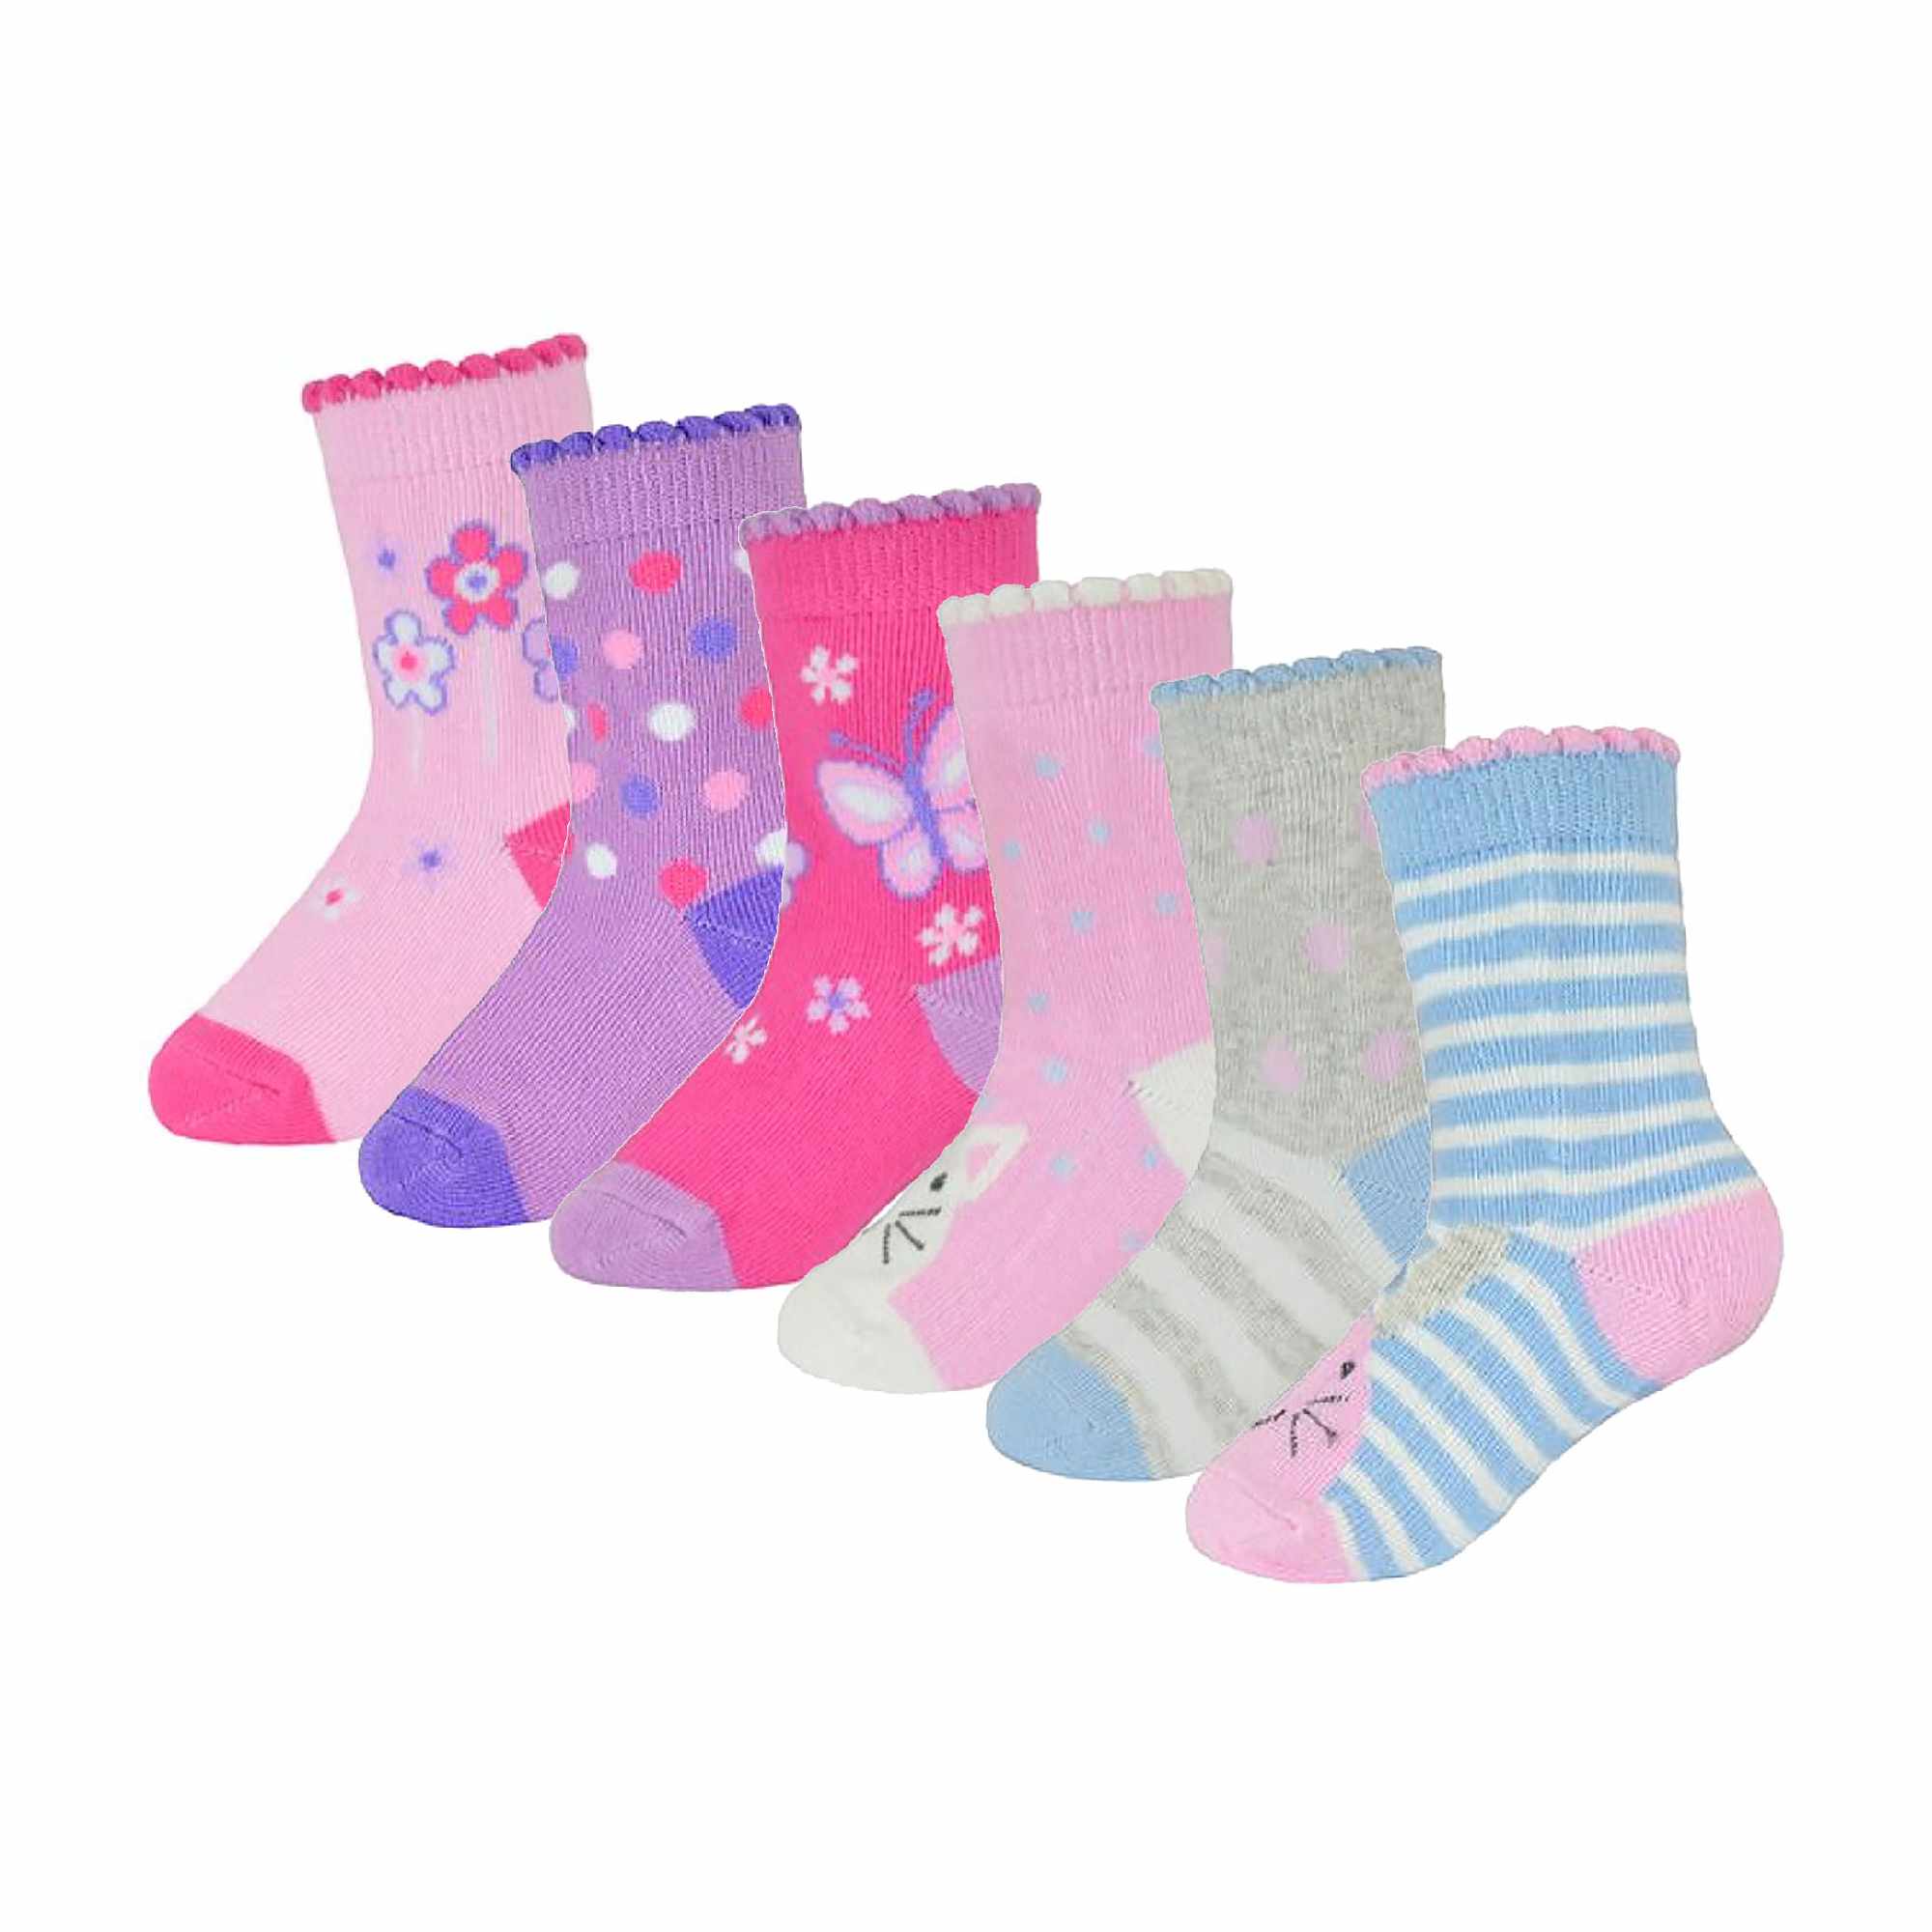 10 Pack Baby Girl Soft Cotton Colorful Non Slip Heel & Toe Socks